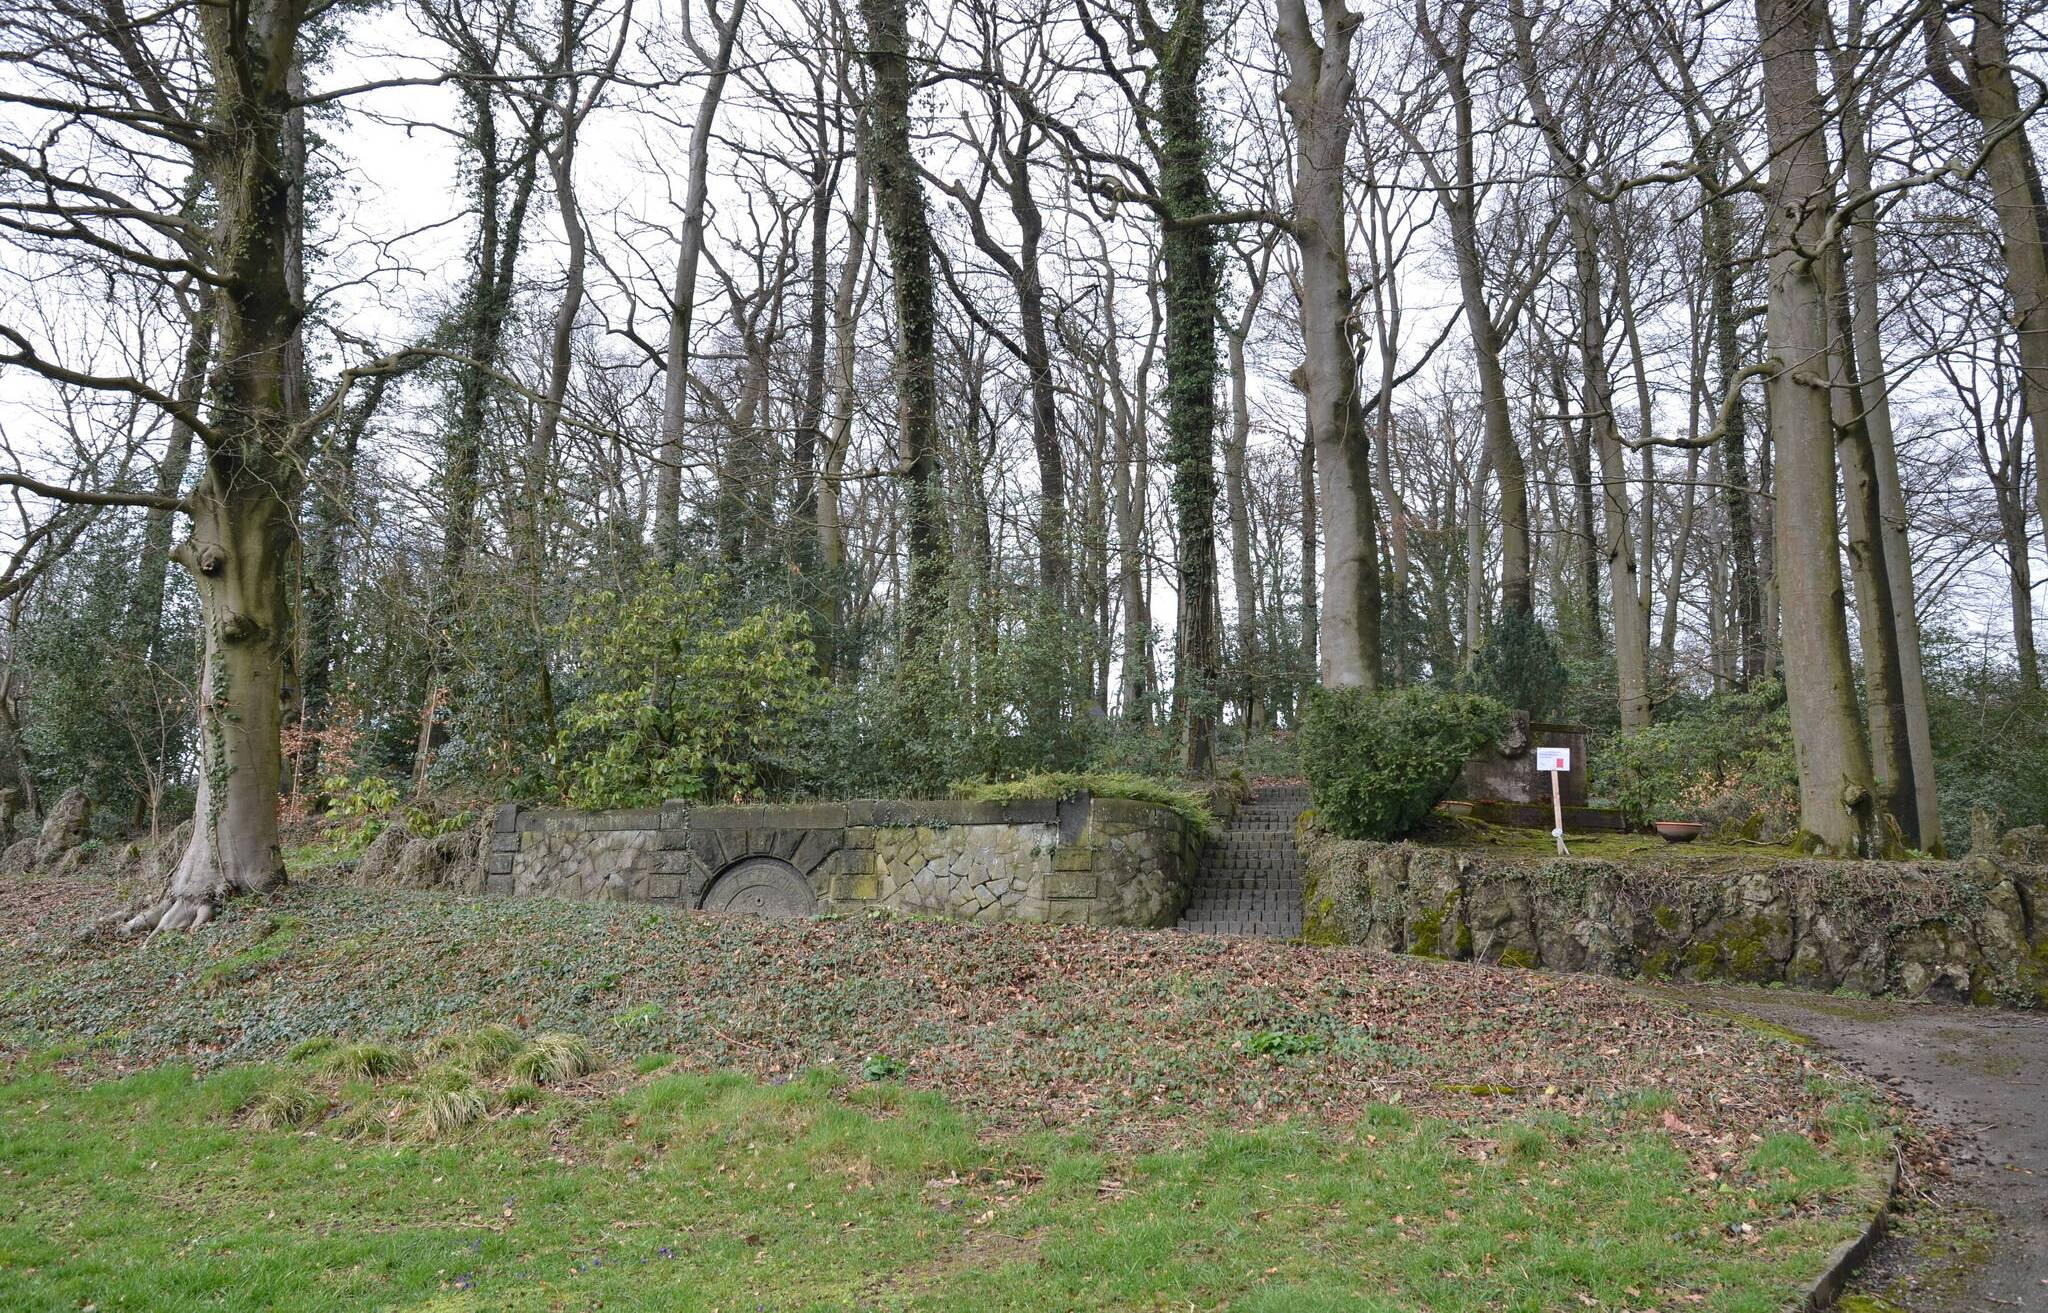 Christlicher Friedhofsverband in Wuppertal gegründet